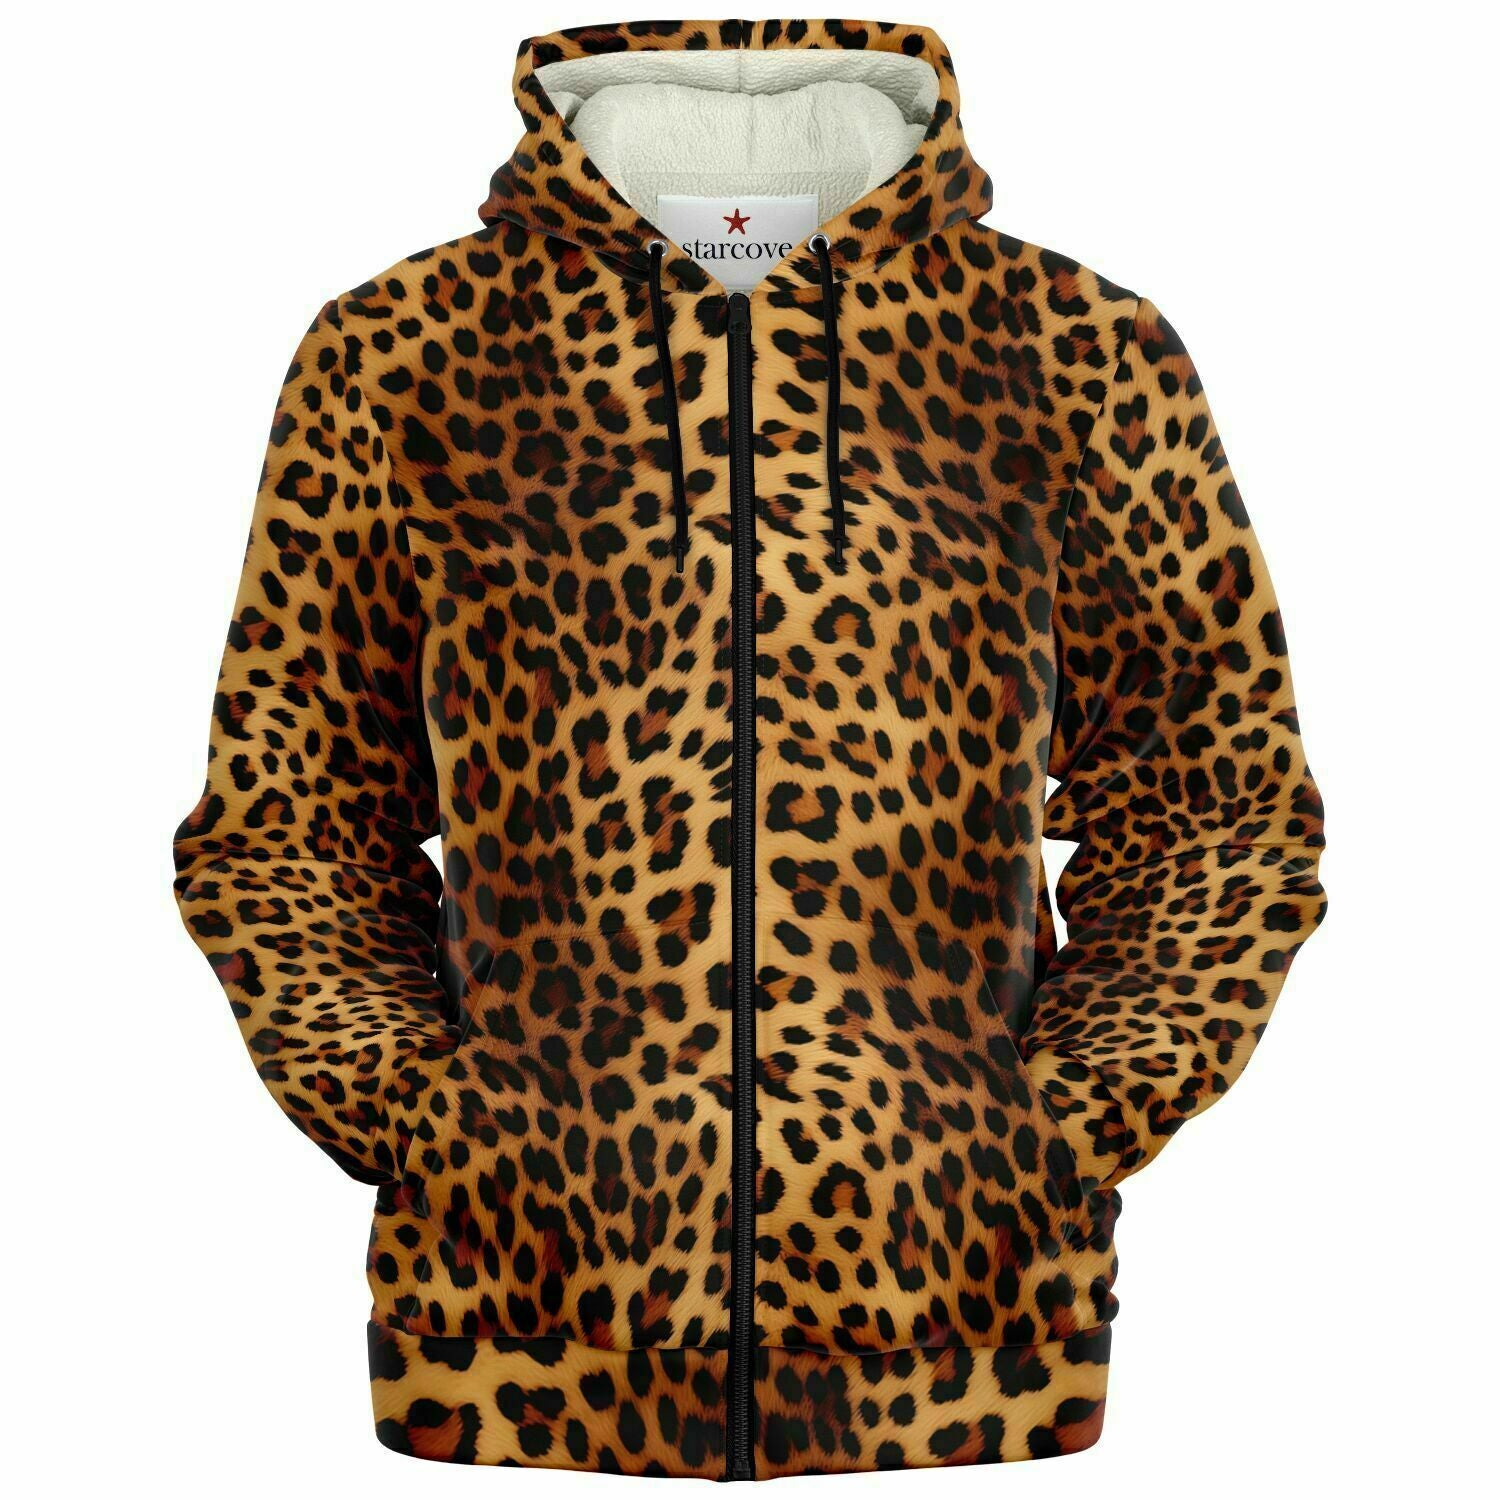 Leopard Zip Up Fleece Hoodie, Animal Print Cheetah Full Zipper Pocket Men Women Unisex Adult Aesthetic Graphic Hooded Sweatshirt Starcove Fashion